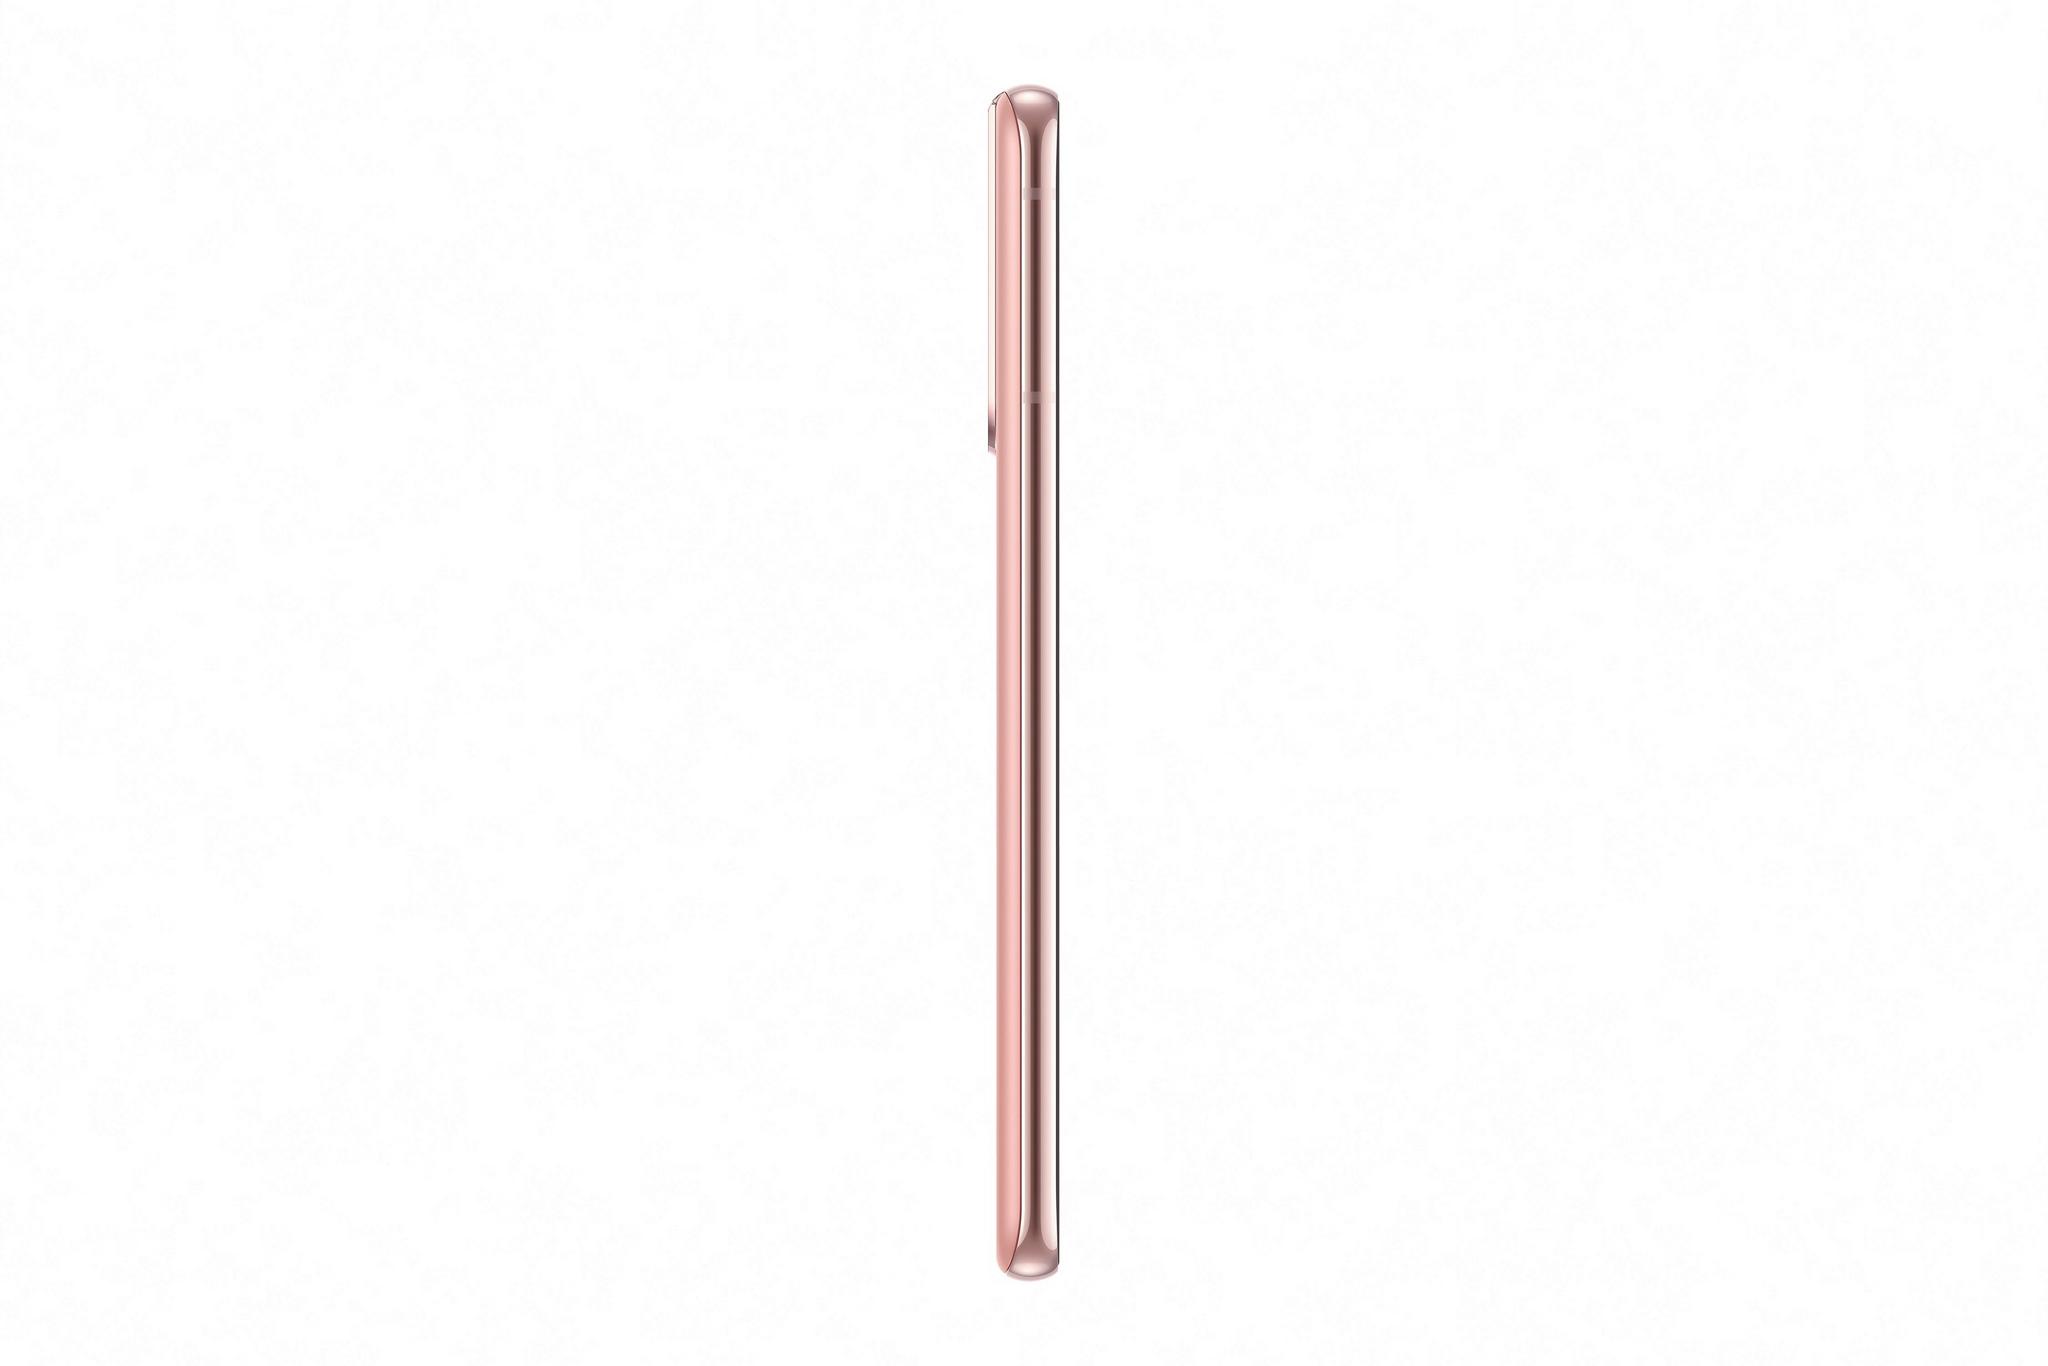 Samsung Galaxy S21 5G 128GB Phone - Pink